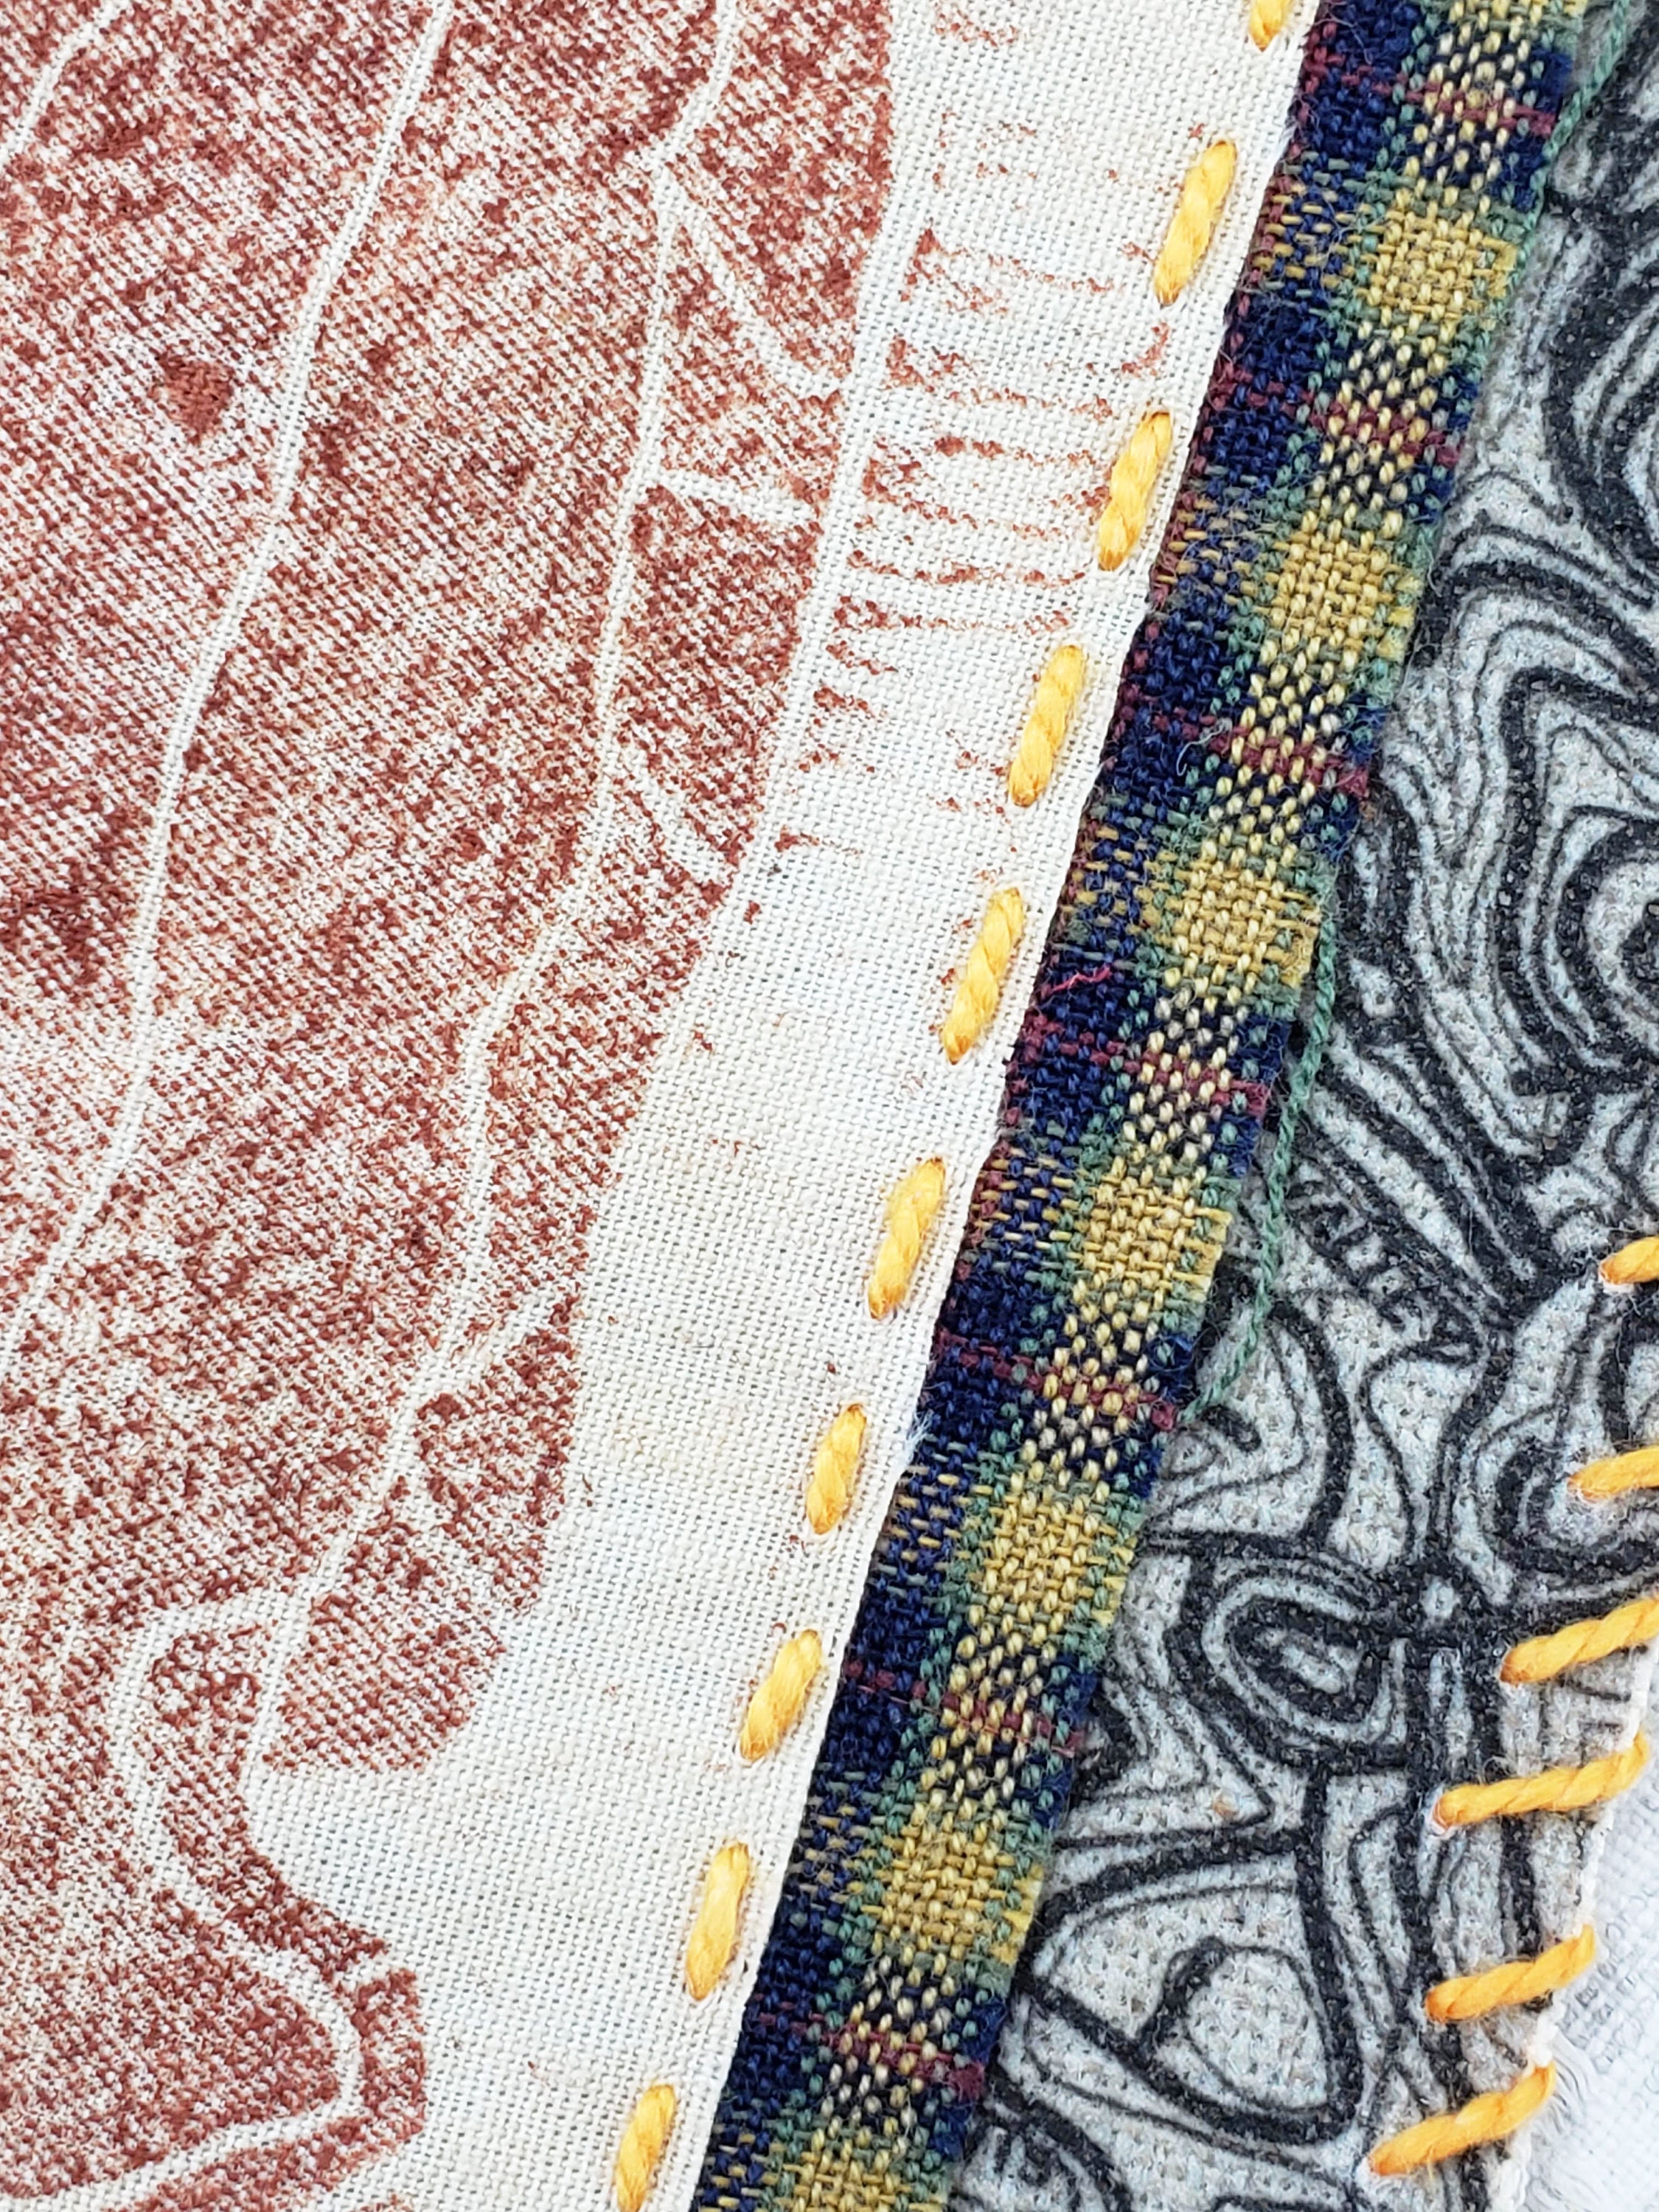 Rustic Arrowhead & Mountain Topo Map '96 Textile Wall | Etsy